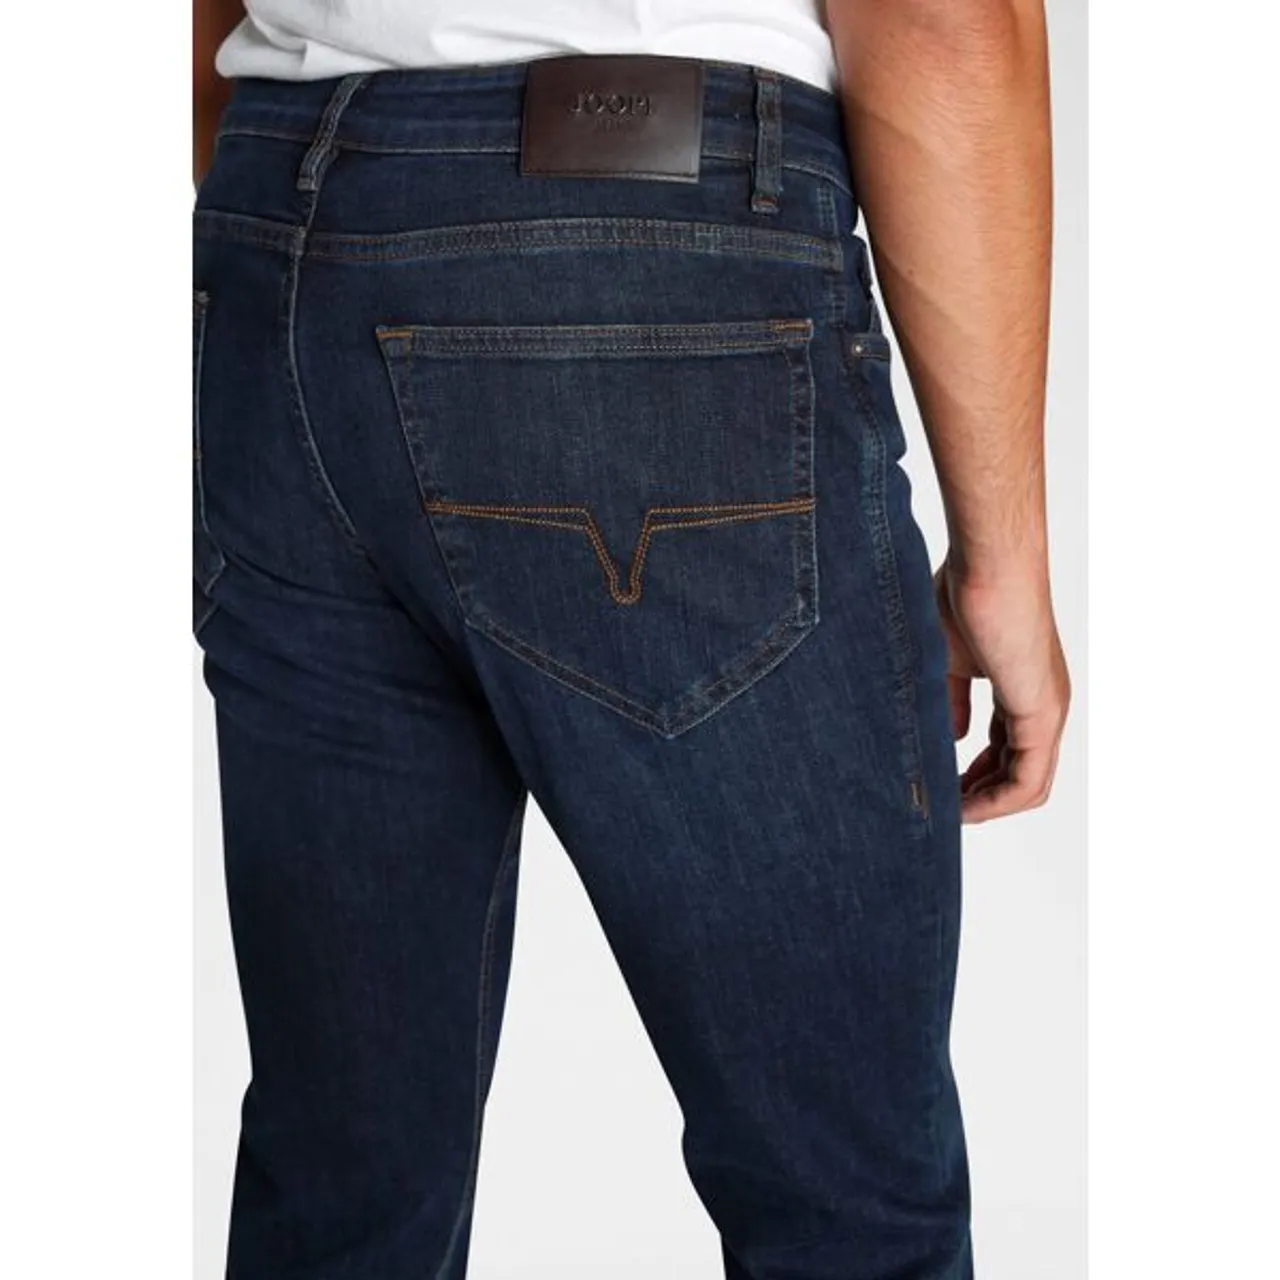 Stretch-Jeans JOOP JEANS "Mitch" Gr. 30, Länge 32, blau (navy) Herren Jeans 5-Pocket-Jeans Stretch